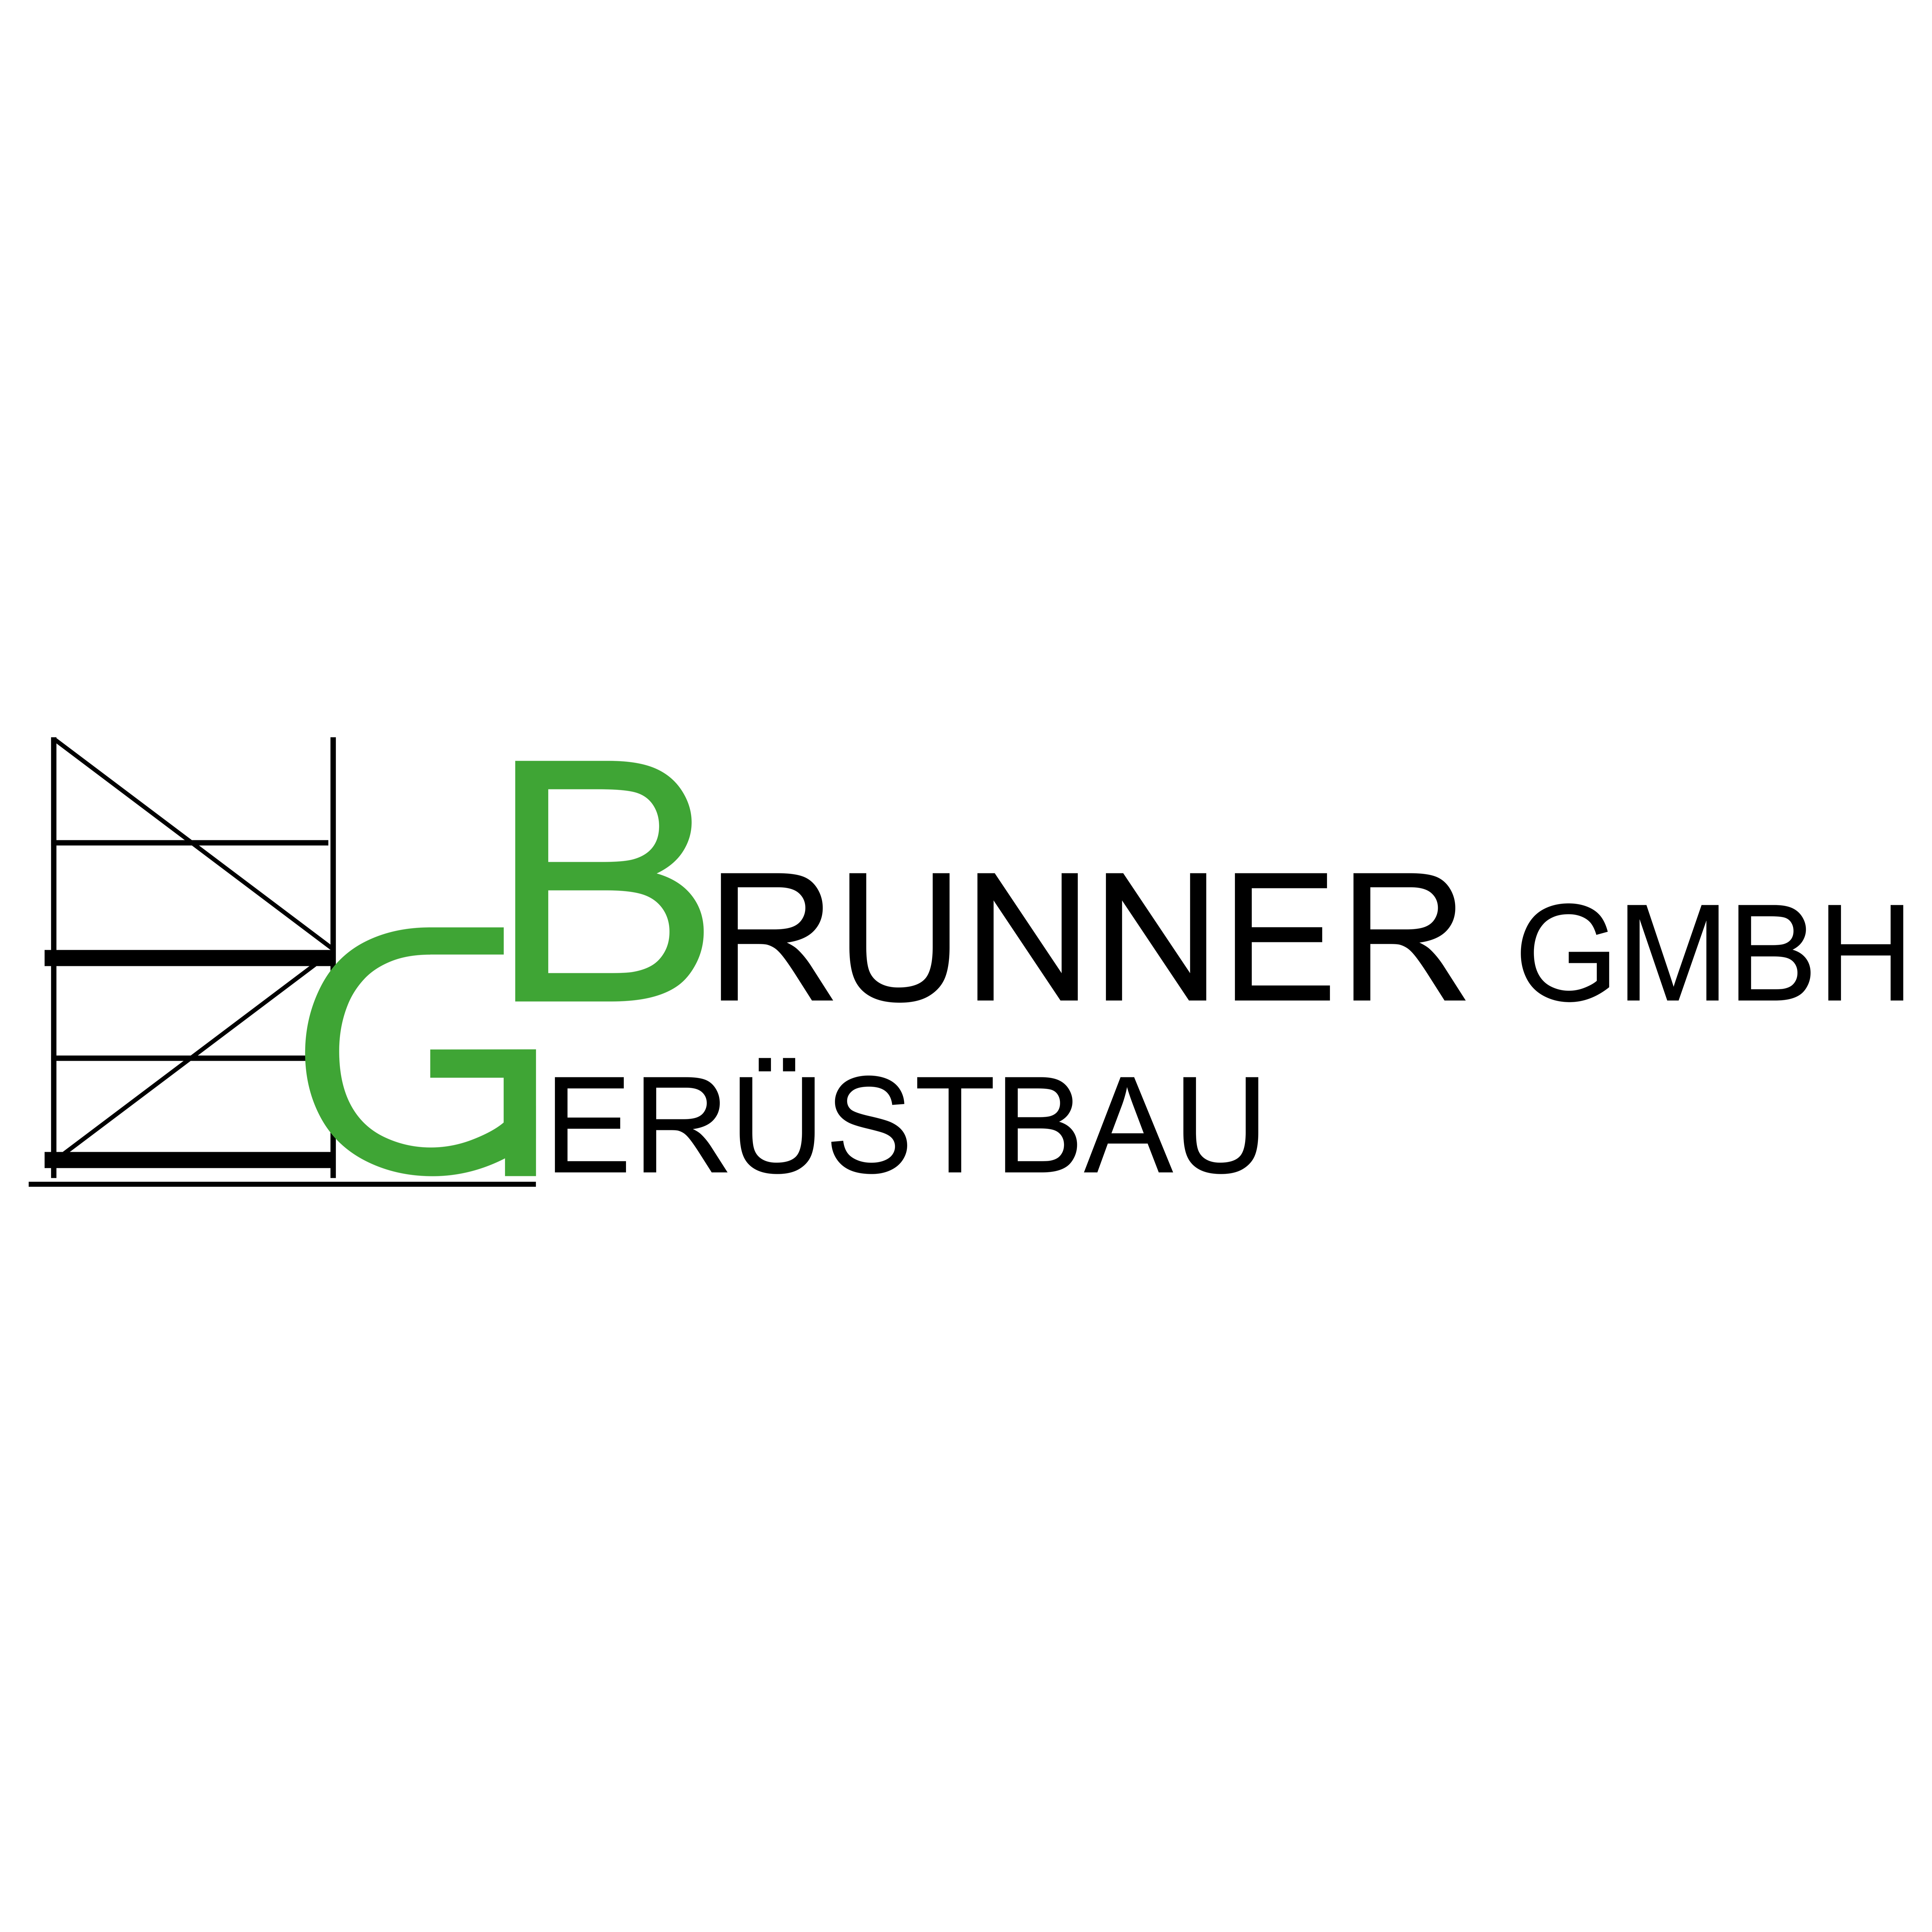 Brunner Gerüstbau GmbH in Anzing Logo